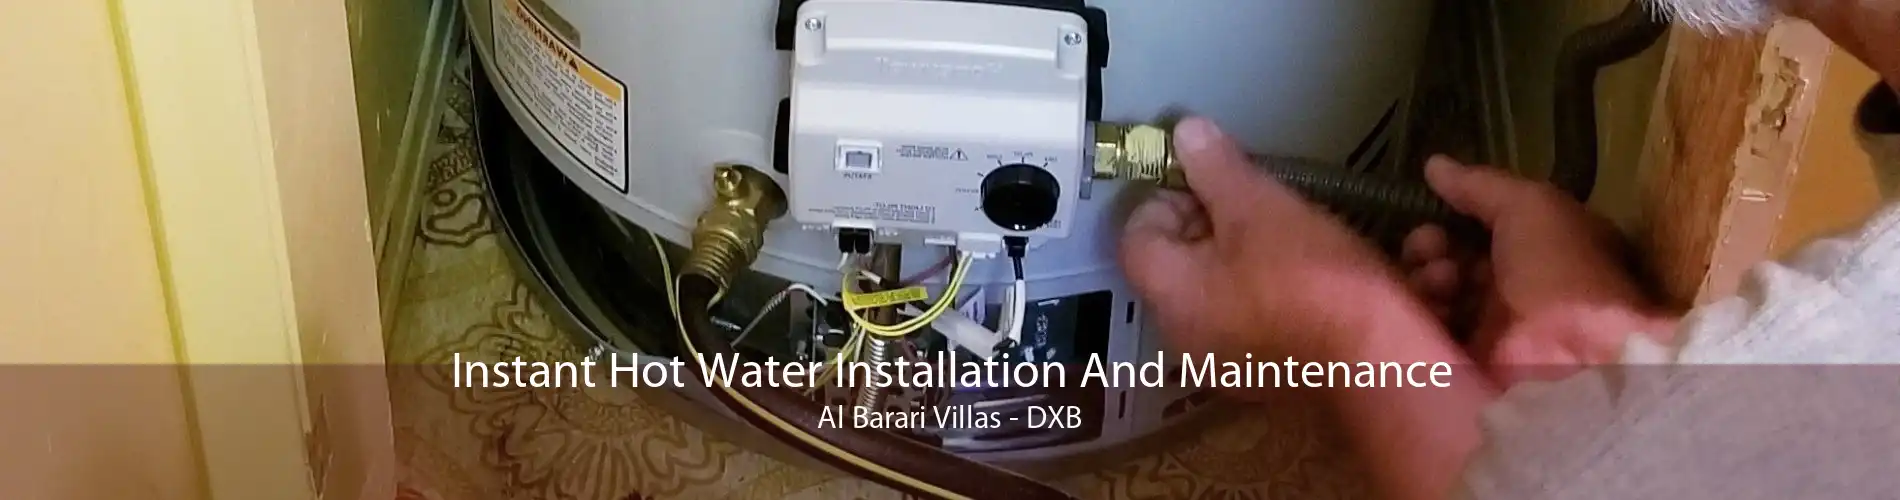 Instant Hot Water Installation And Maintenance Al Barari Villas - DXB